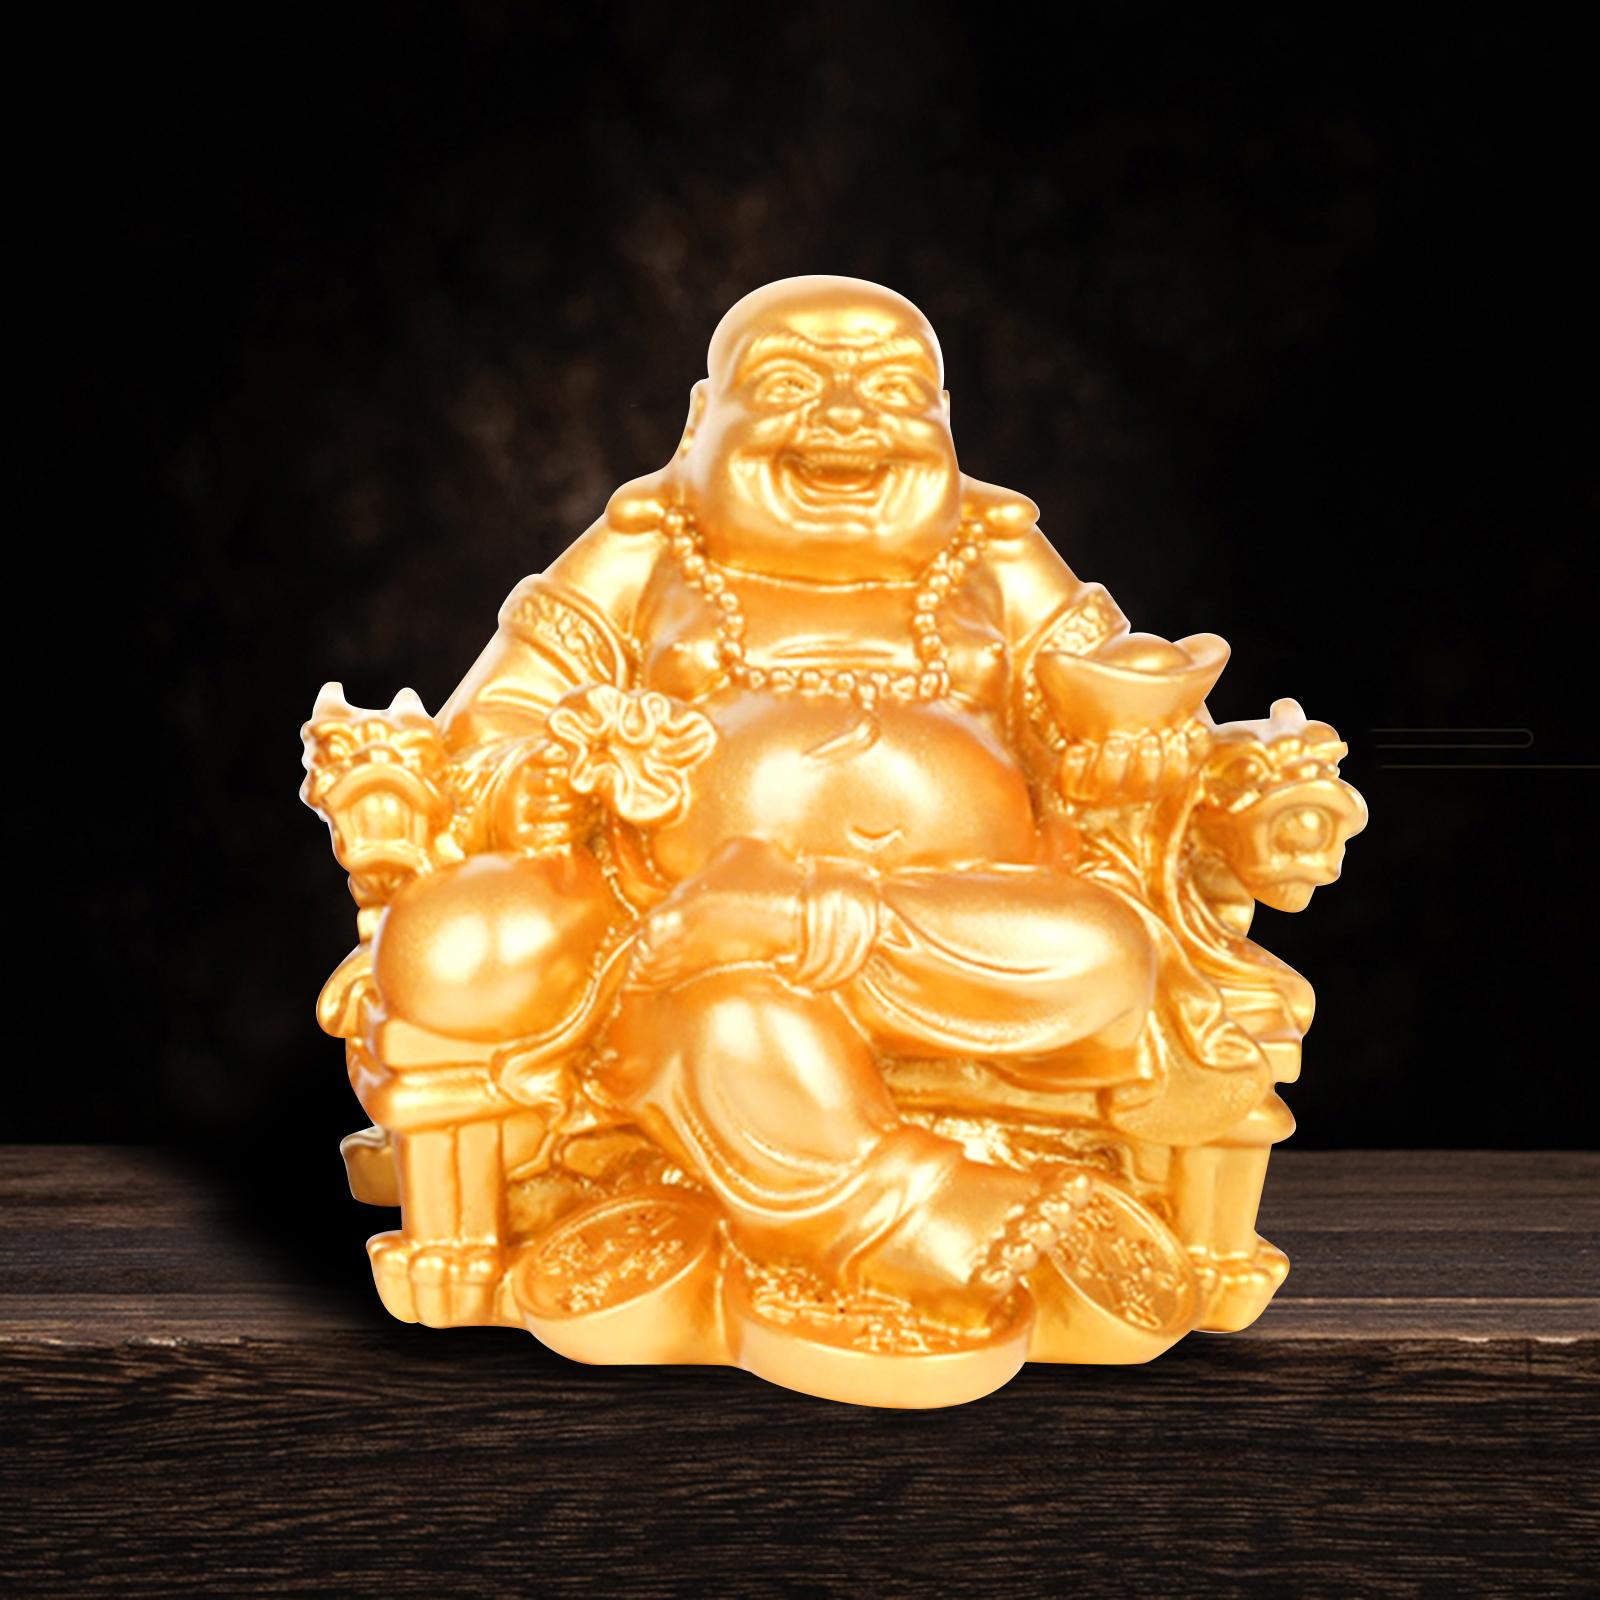 Mini Resin Buddha Statues Sculpture Figurine Office Living Room Decor Gold